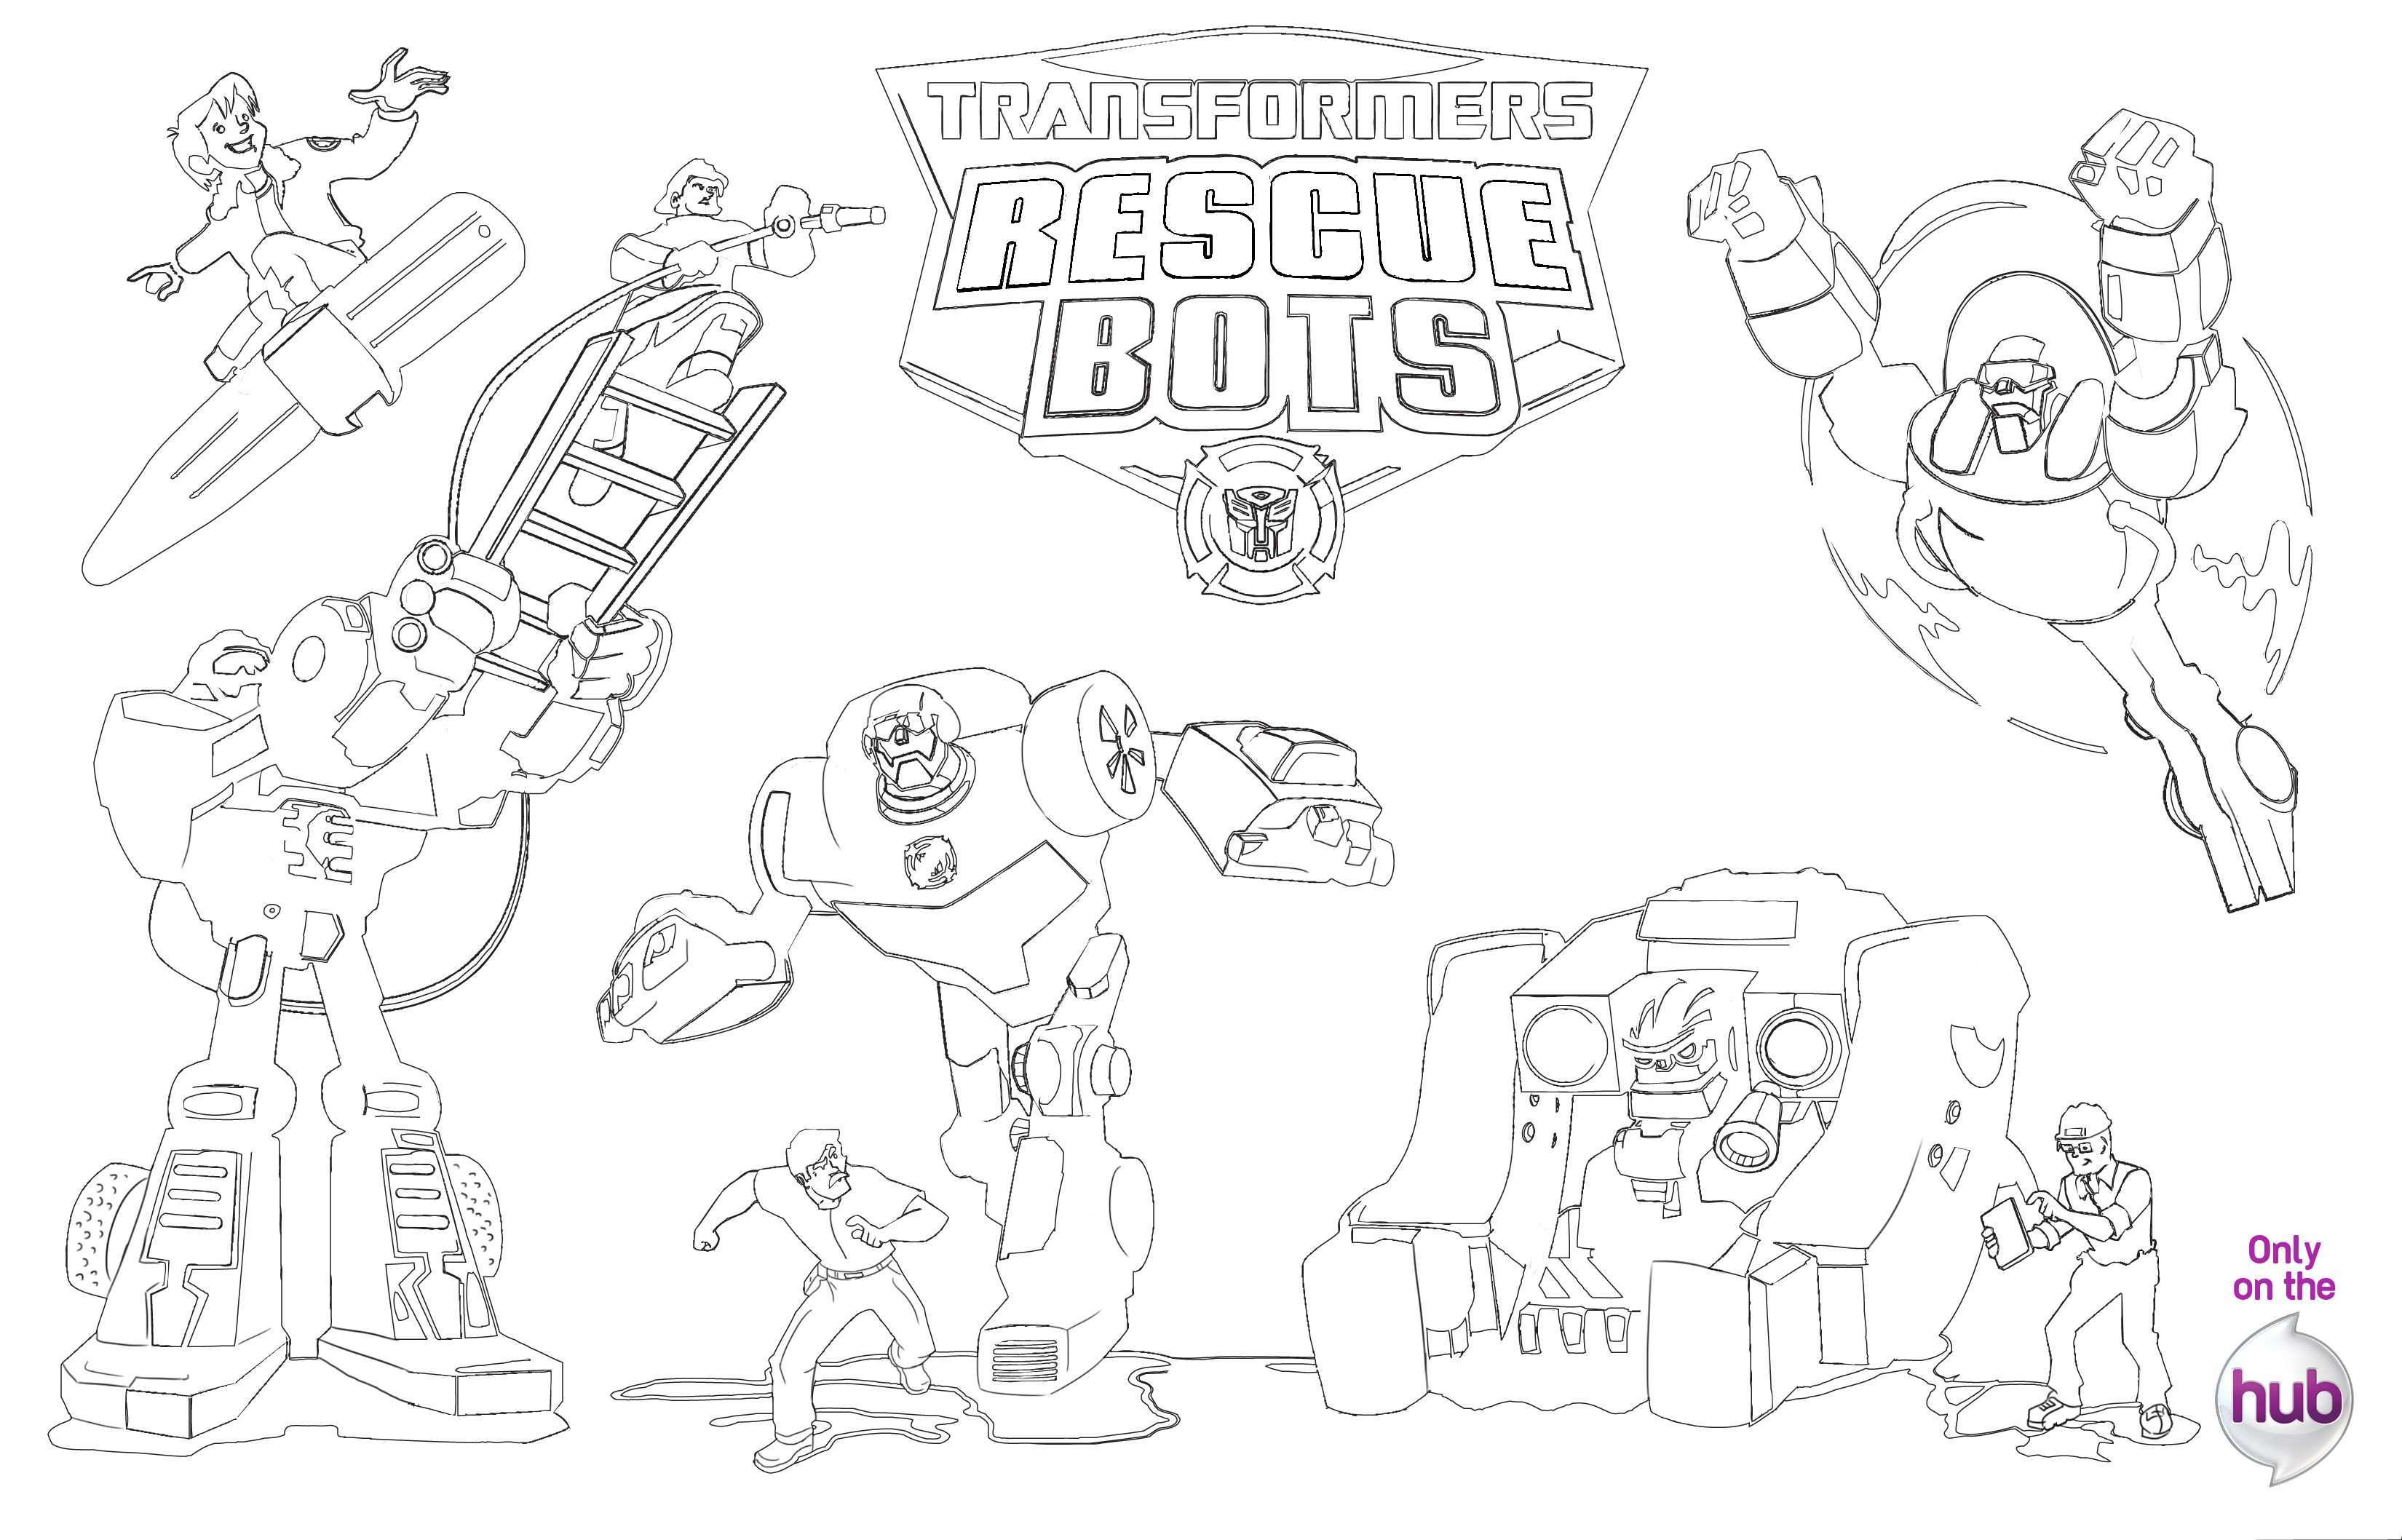 Captcha Rescue Bots Birthday Rescue Bots Transformers Rescue Bots